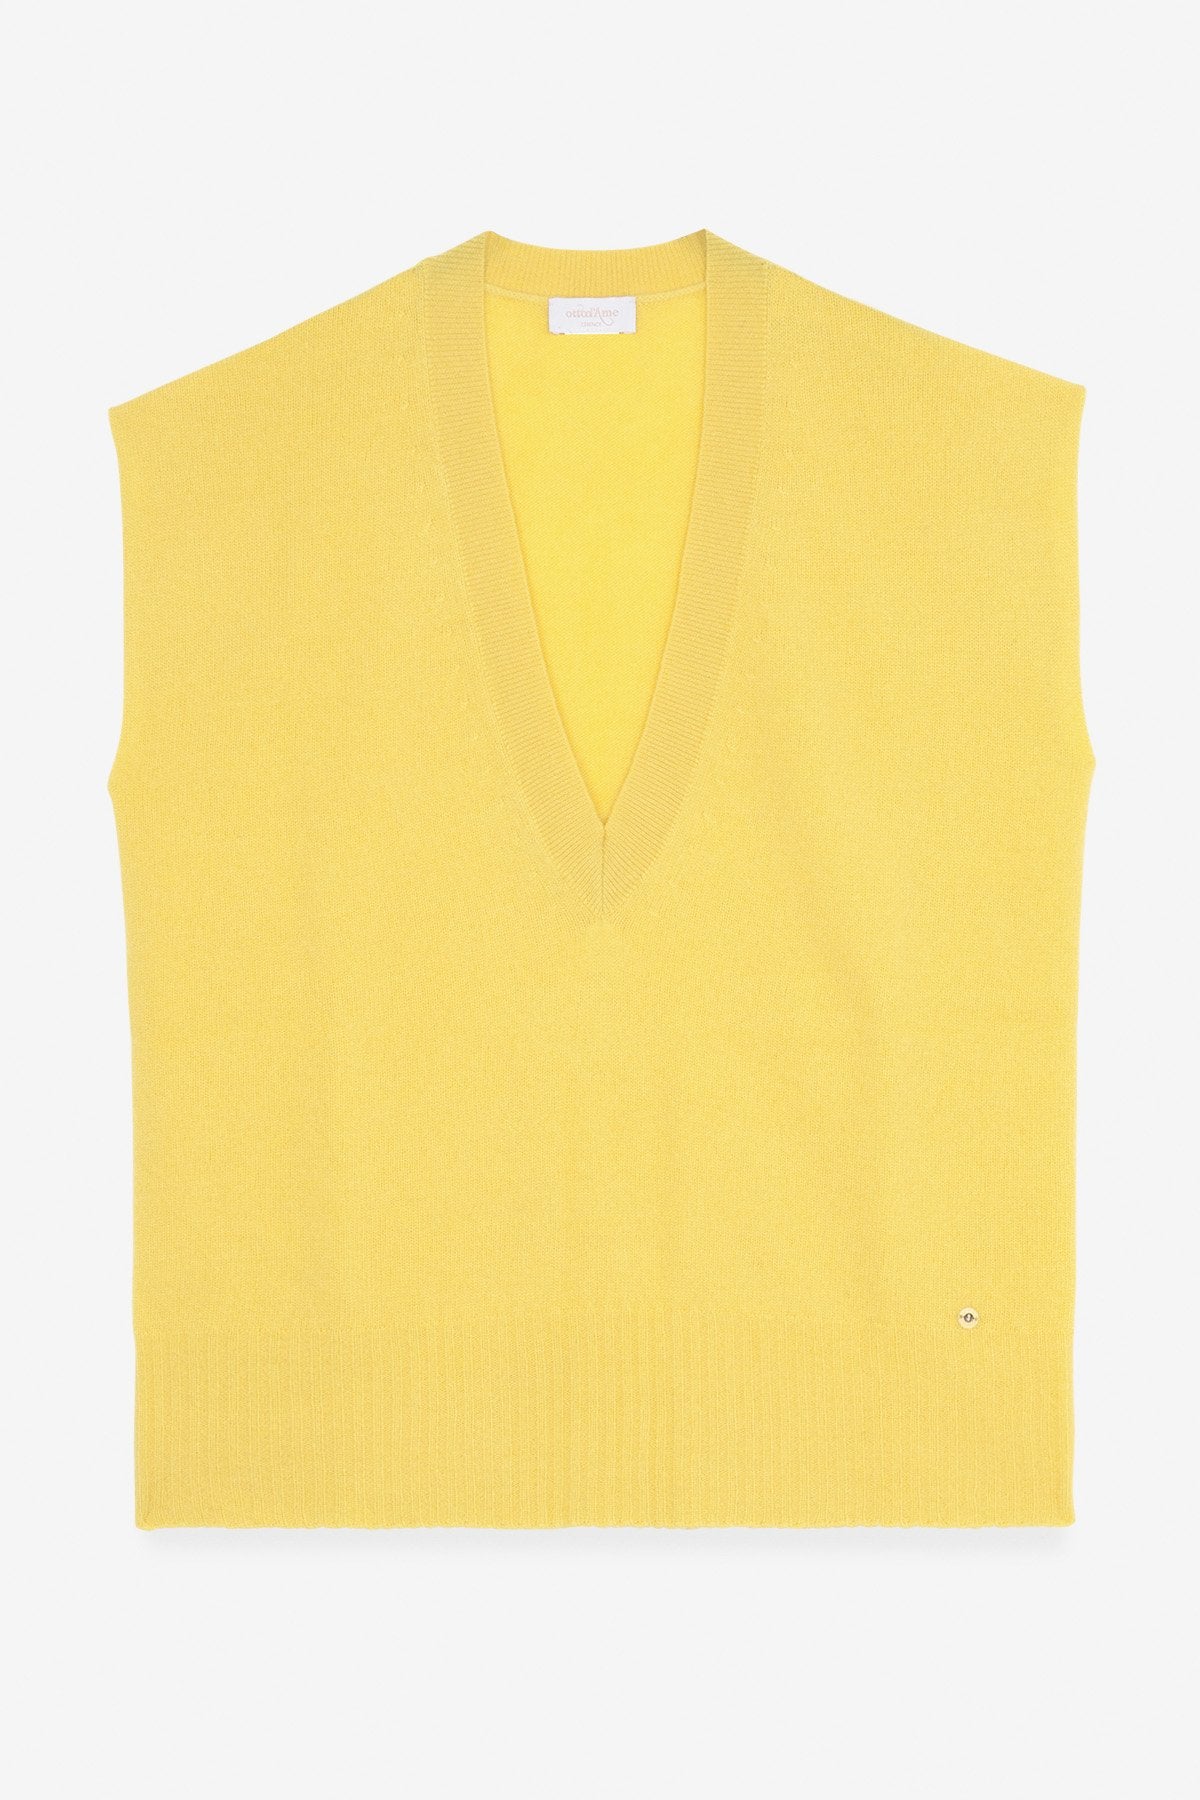 Ottod'ame- Filo Sweater Vest: Yellow